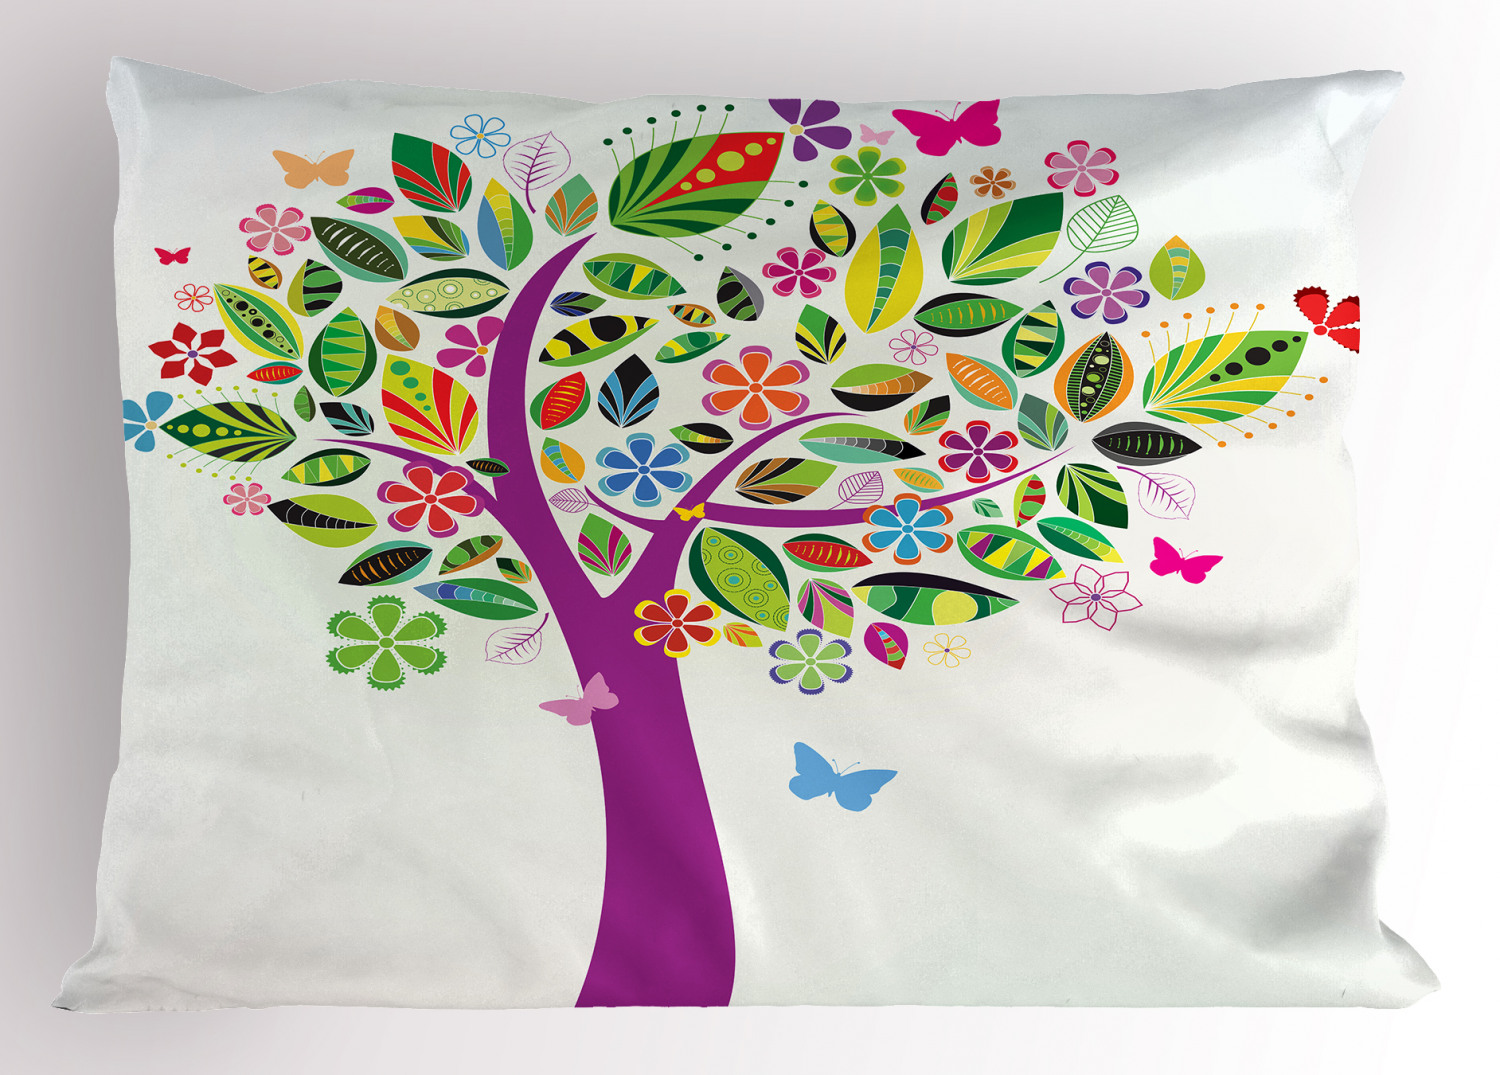 Tree of Life Pillow Sham Decorative Pillowcase 3 Sizes for Bedroom Decor 